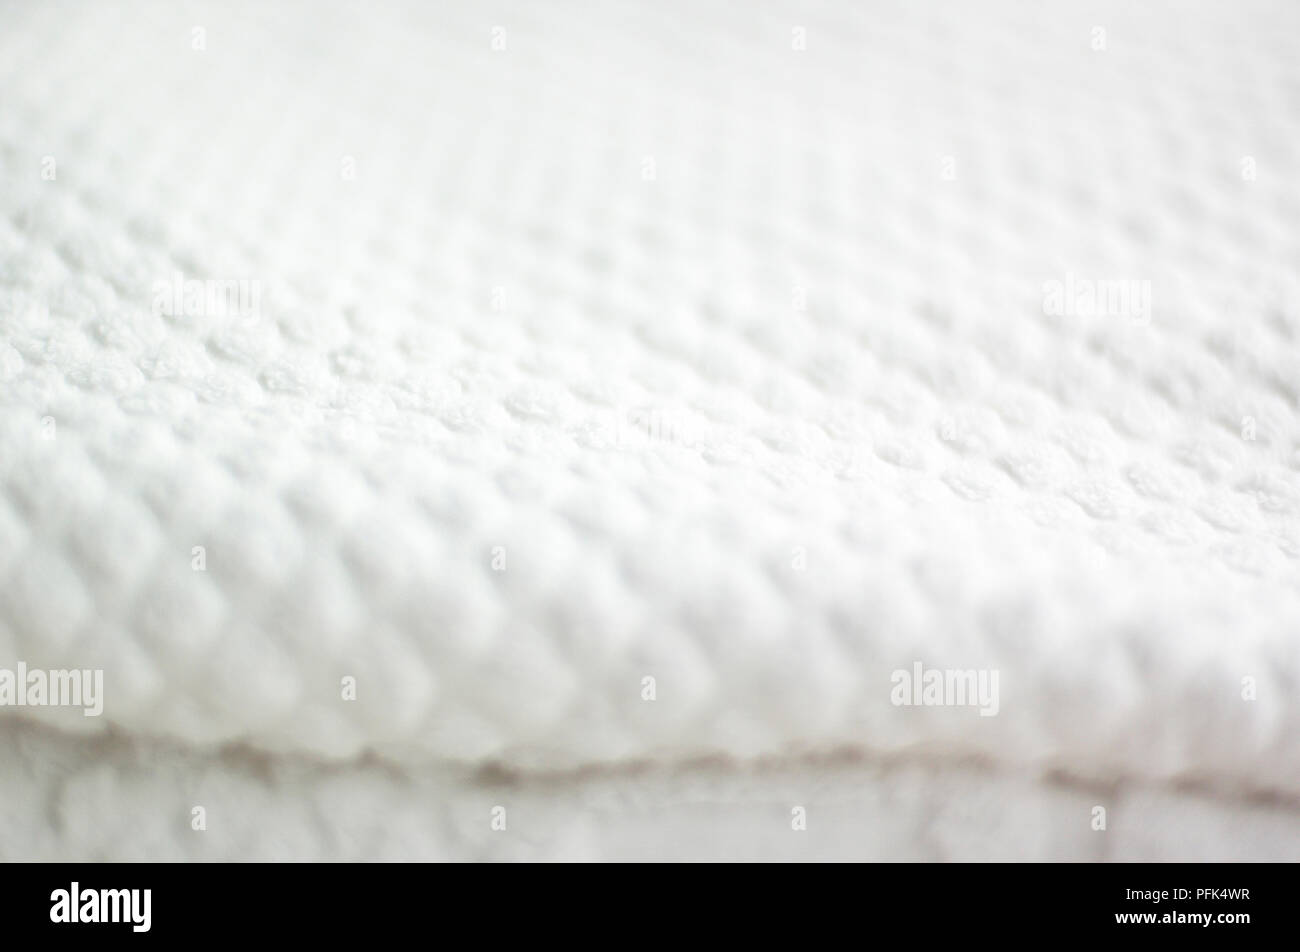 White textured baby blanket, folded up Stock Photo